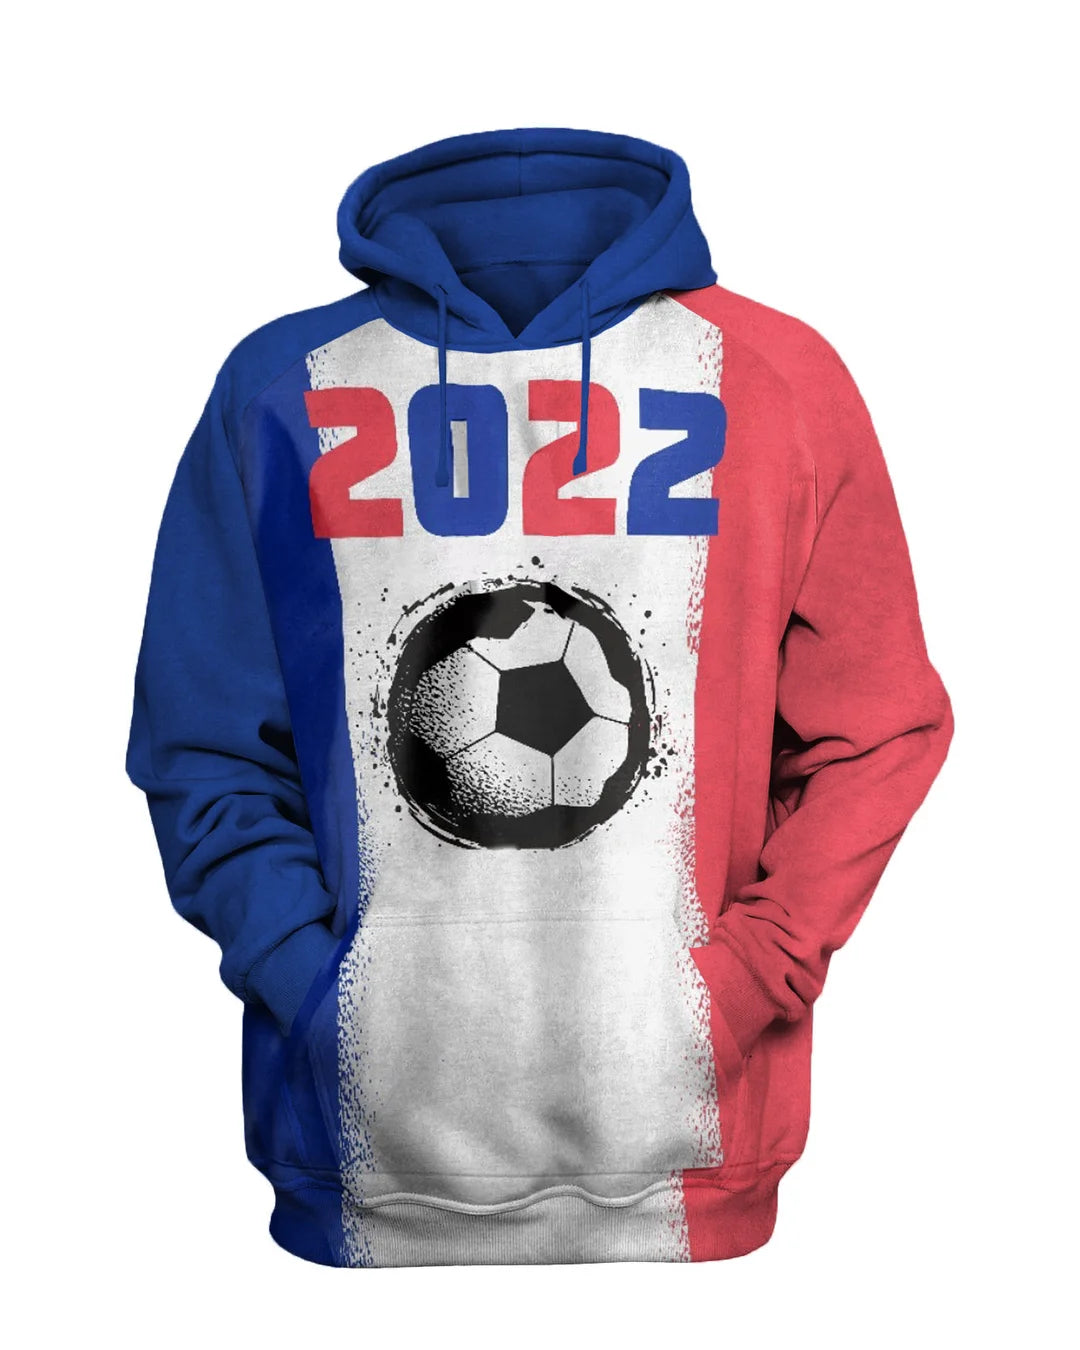 2022 Football Printed Sweatshirt Set - DUVAL